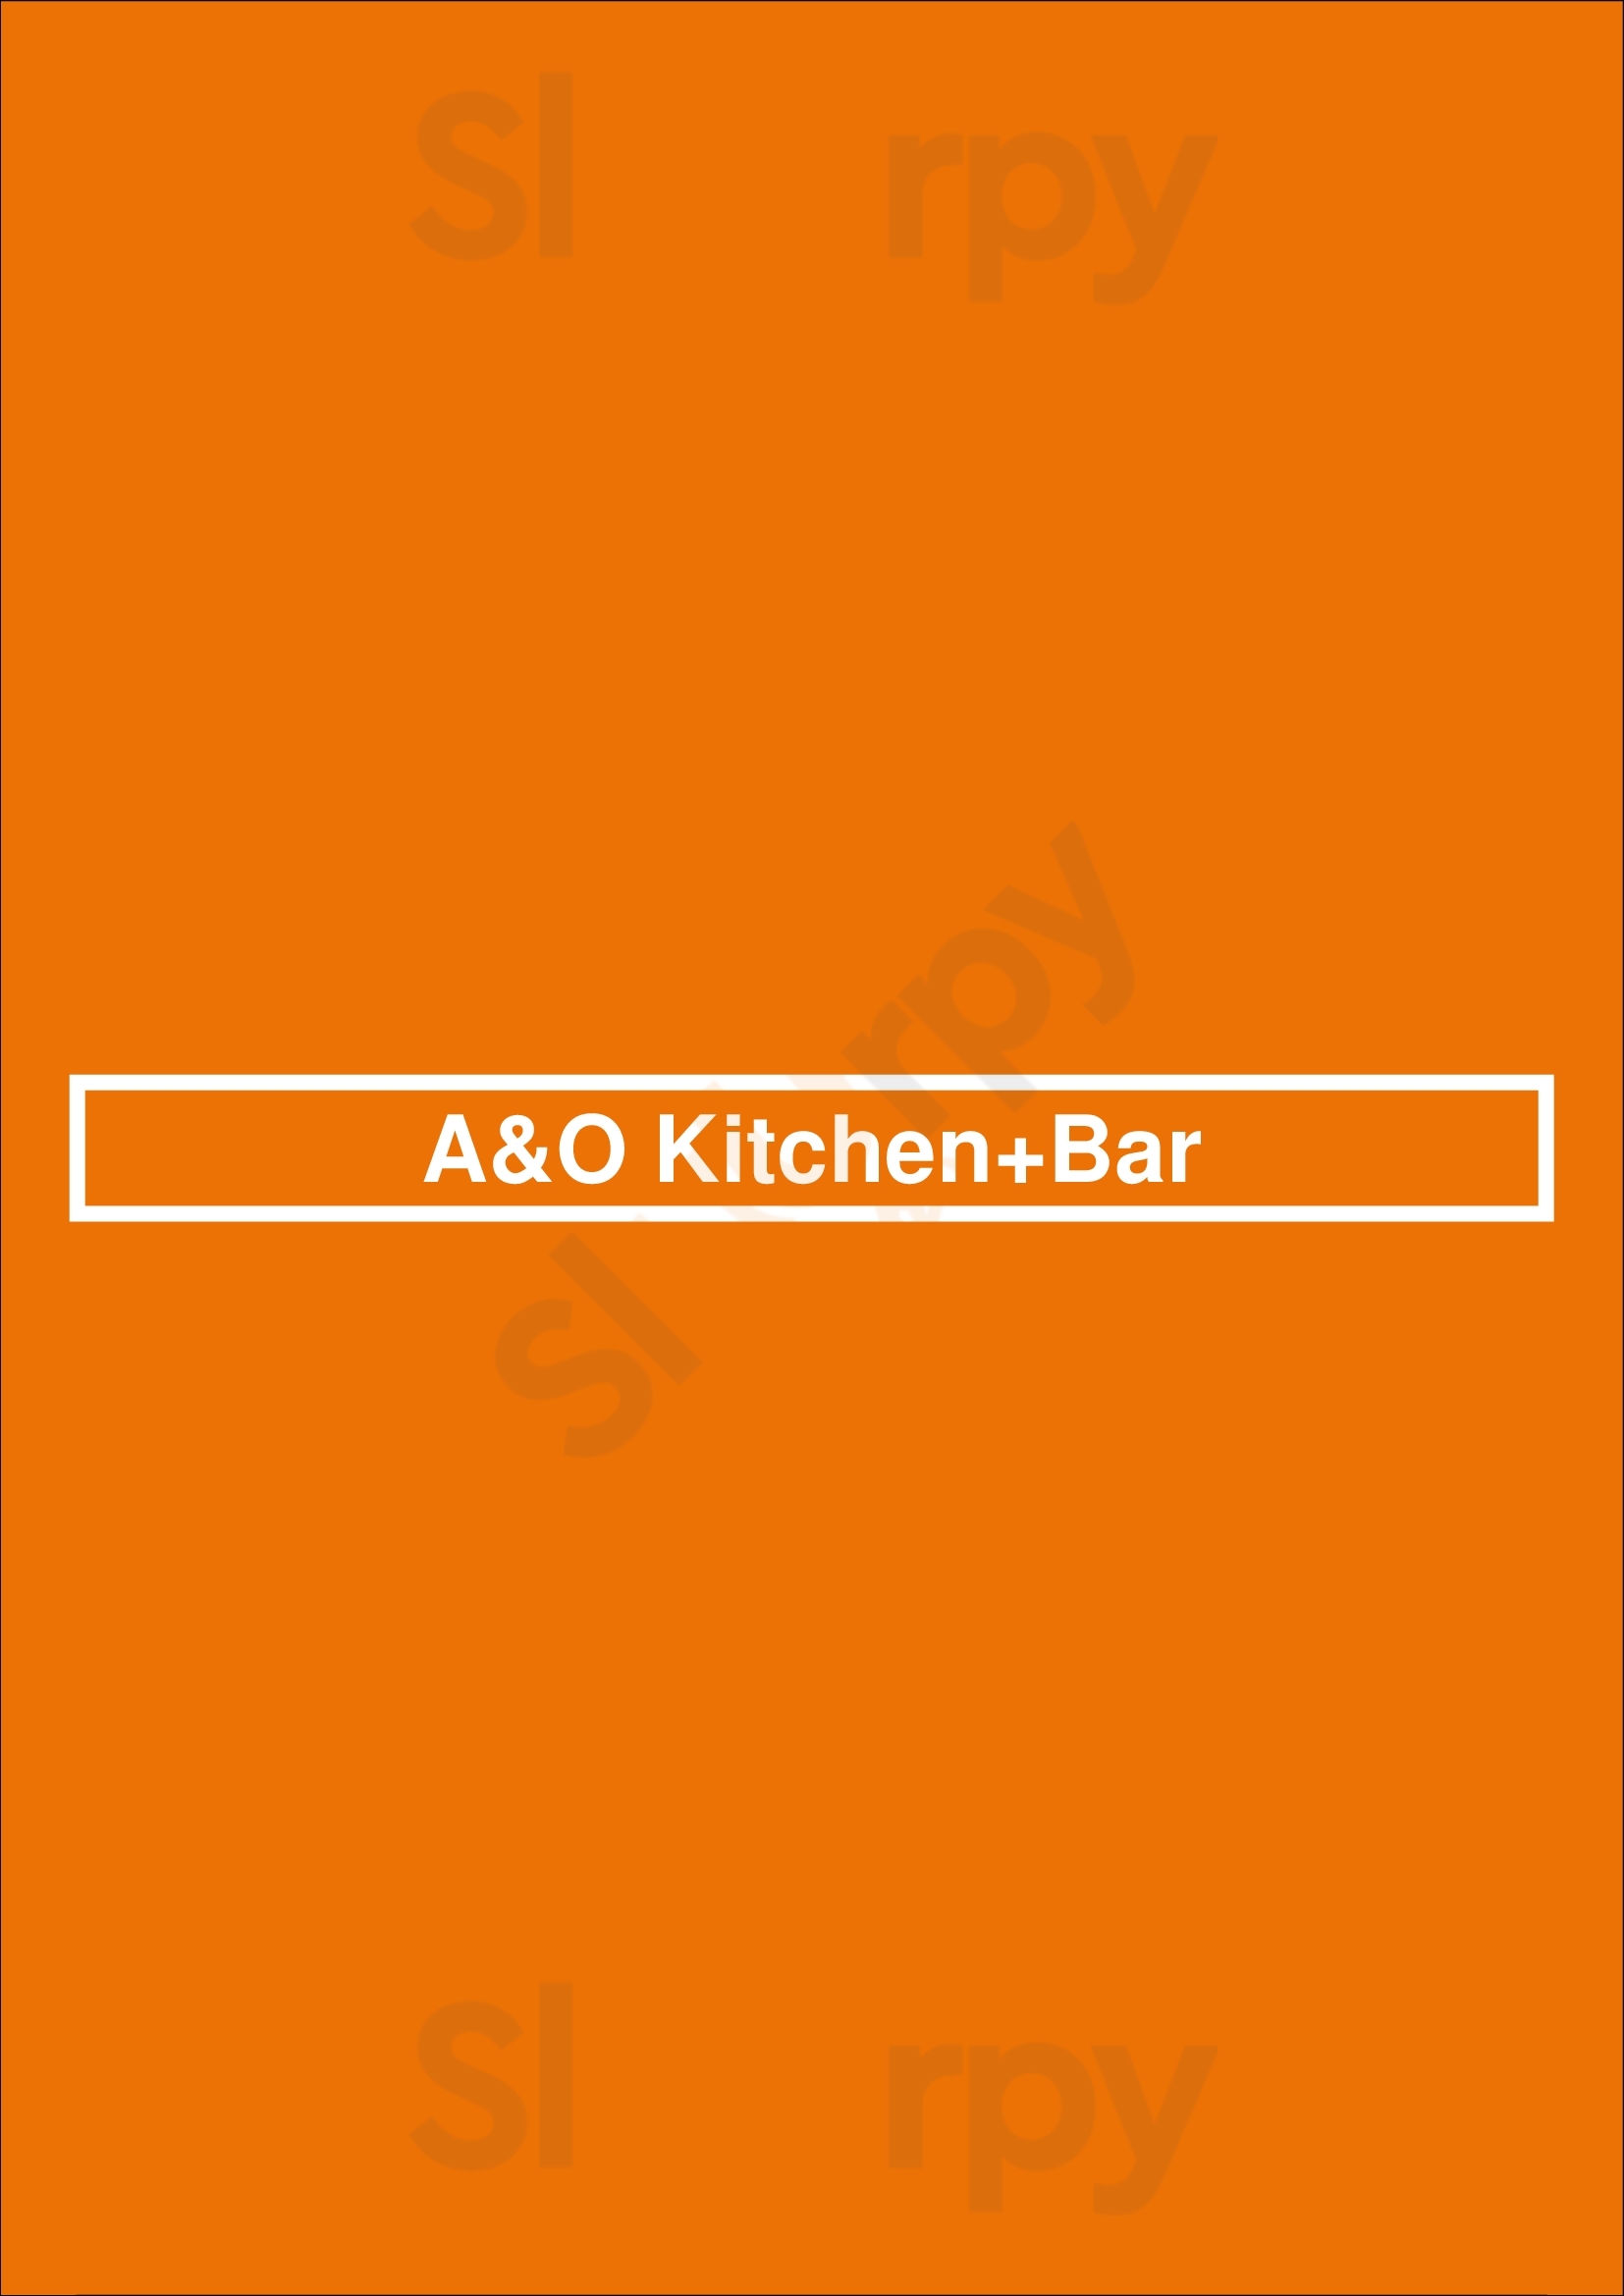 A+o Restaurant | Bar Newport Beach Menu - 1